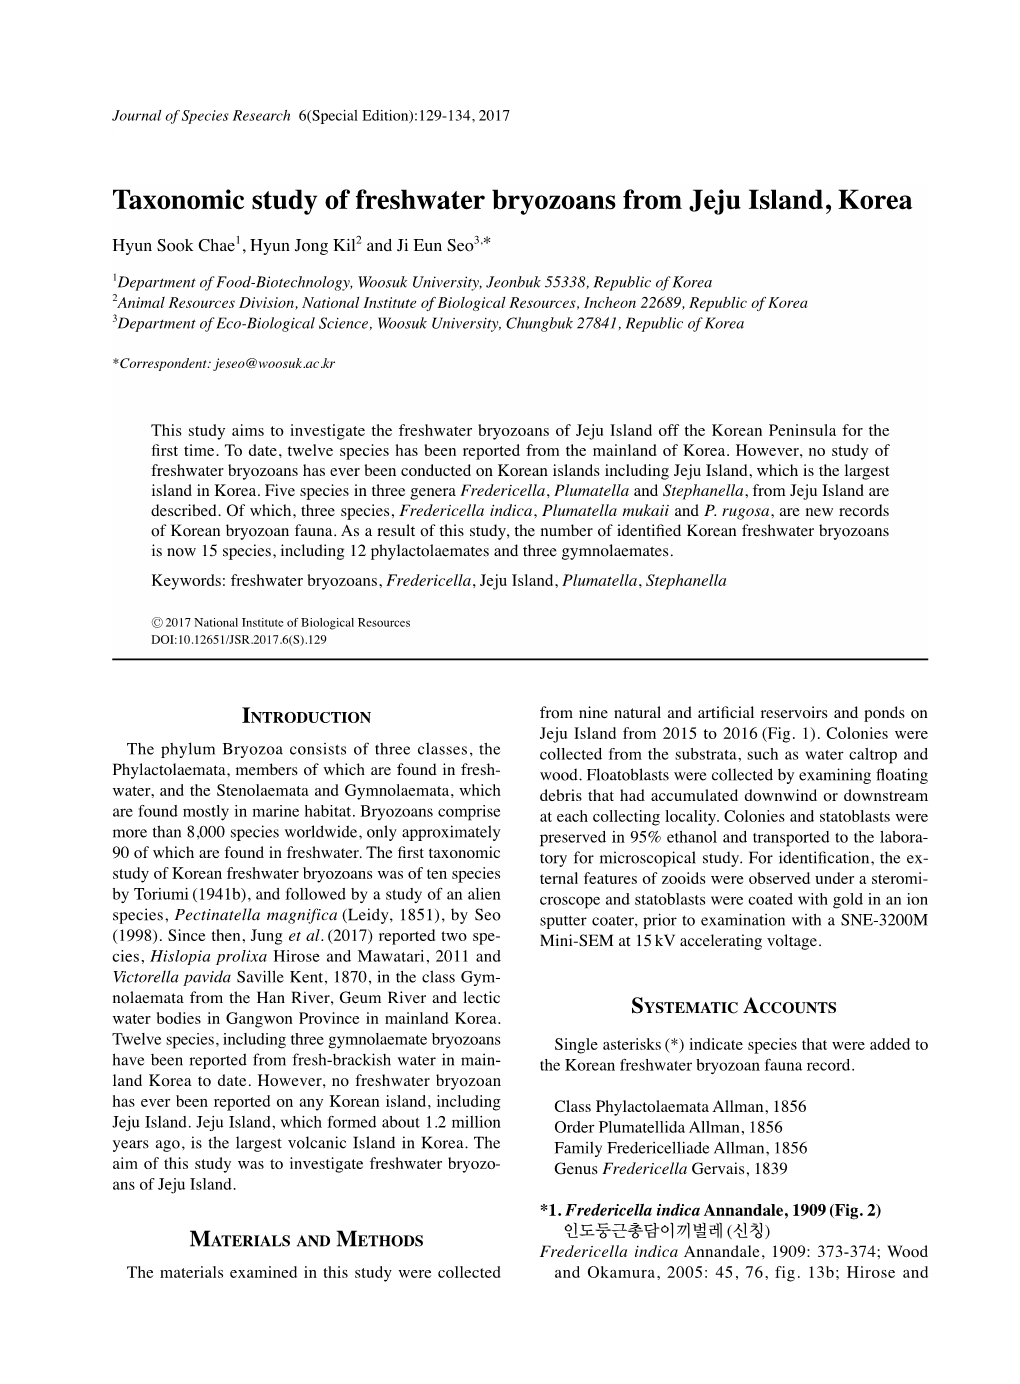 Taxonomic Study of Freshwater Bryozoans from Jeju Island, Korea